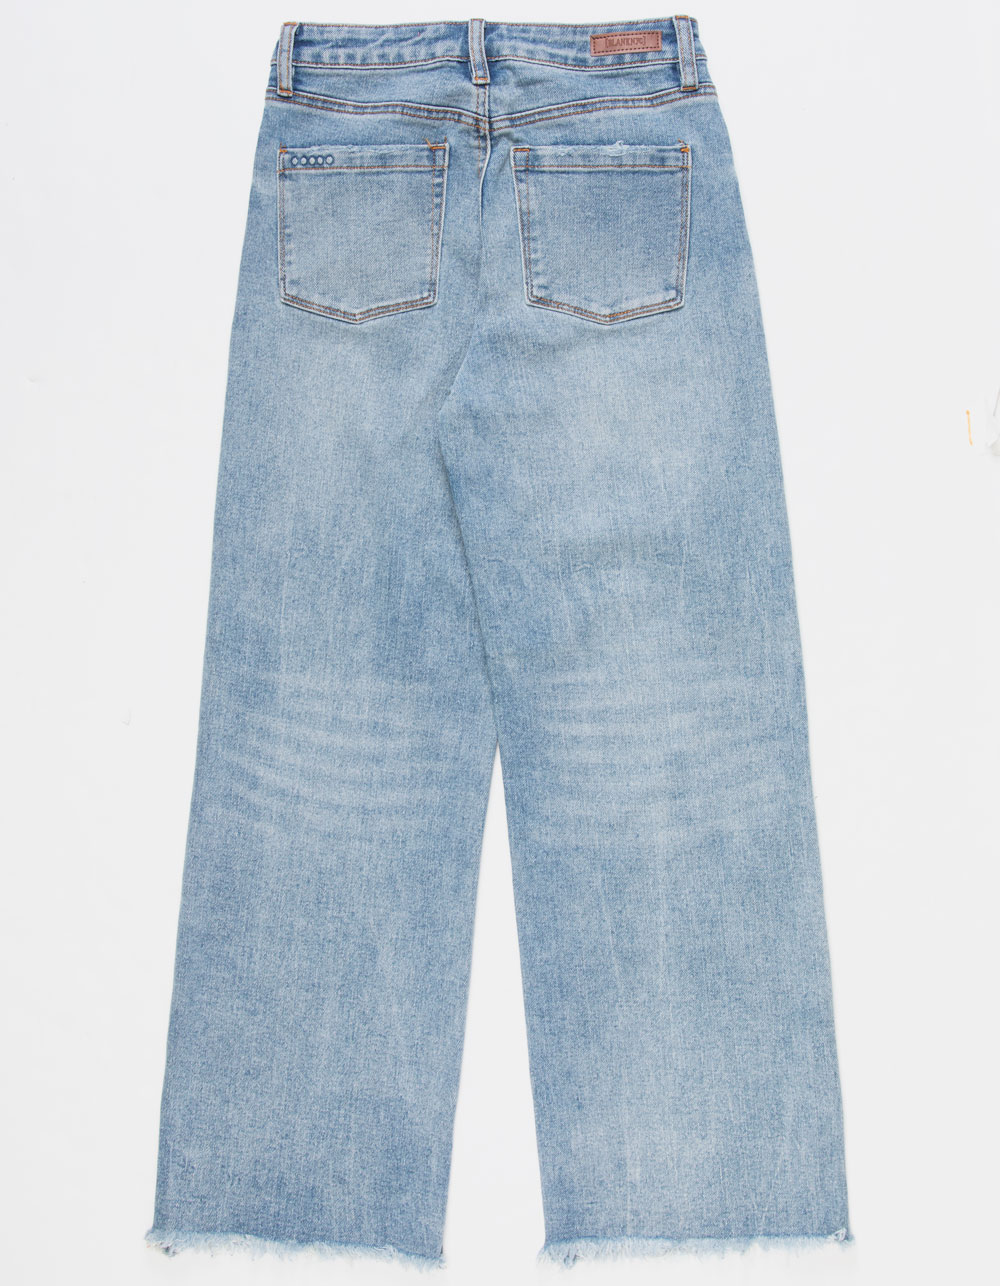 BLANK NYC Say Something Wide Leg Girls Jeans - MEDIUM WASH | Tillys